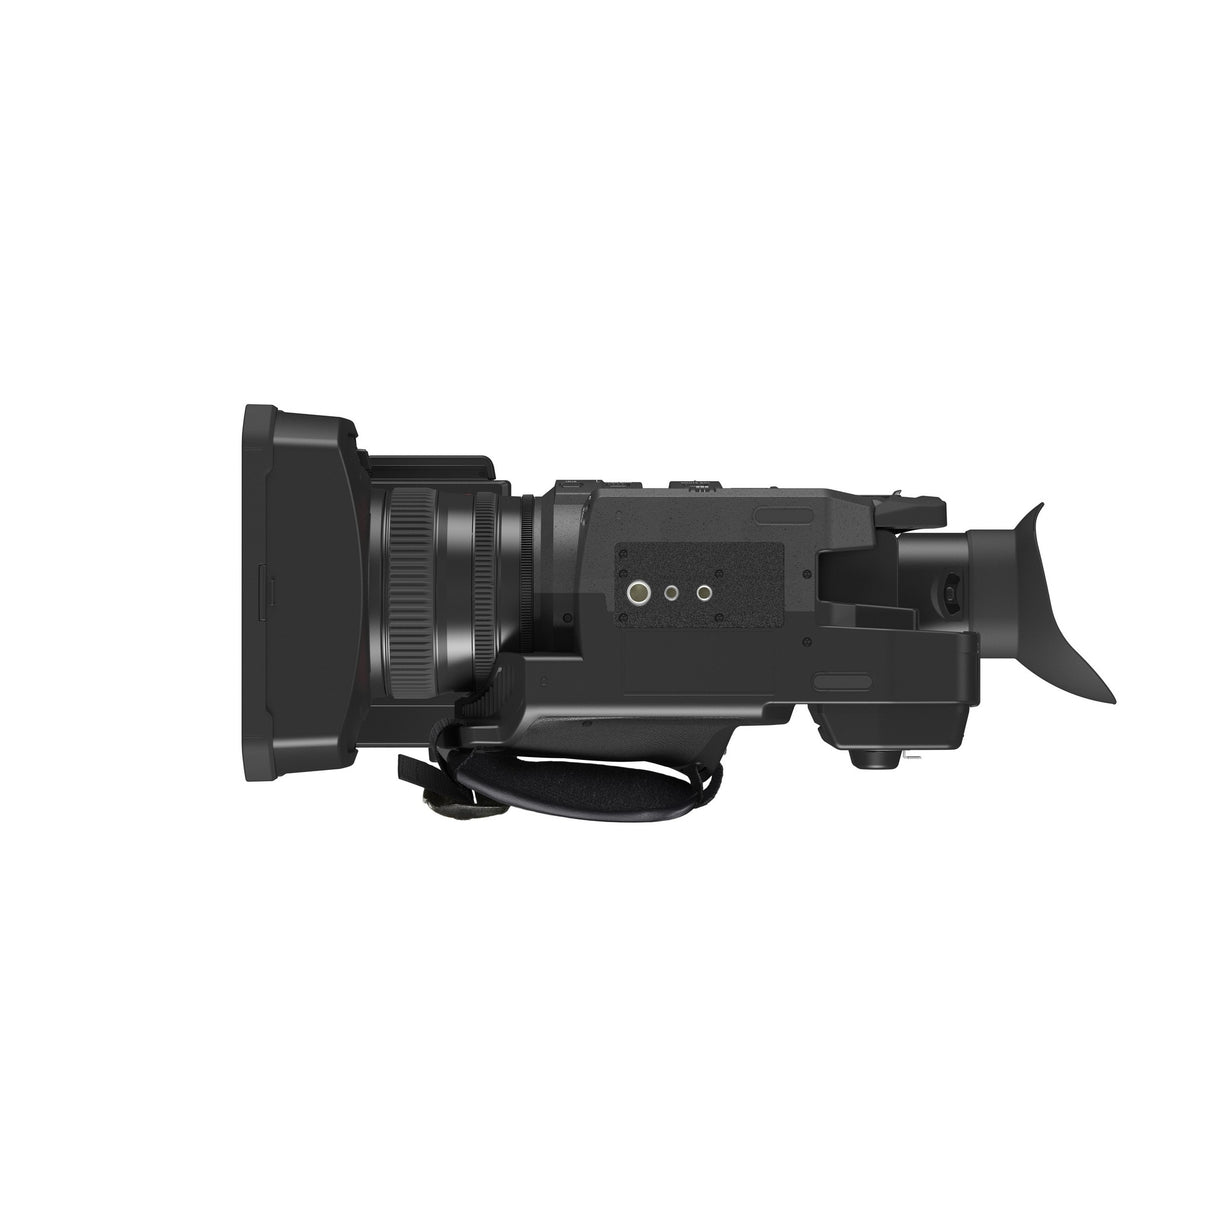 Panasonic HC-X2 4K Camcorder with 24.5mm Wide-Angle Lens, 13-Stop V-Log